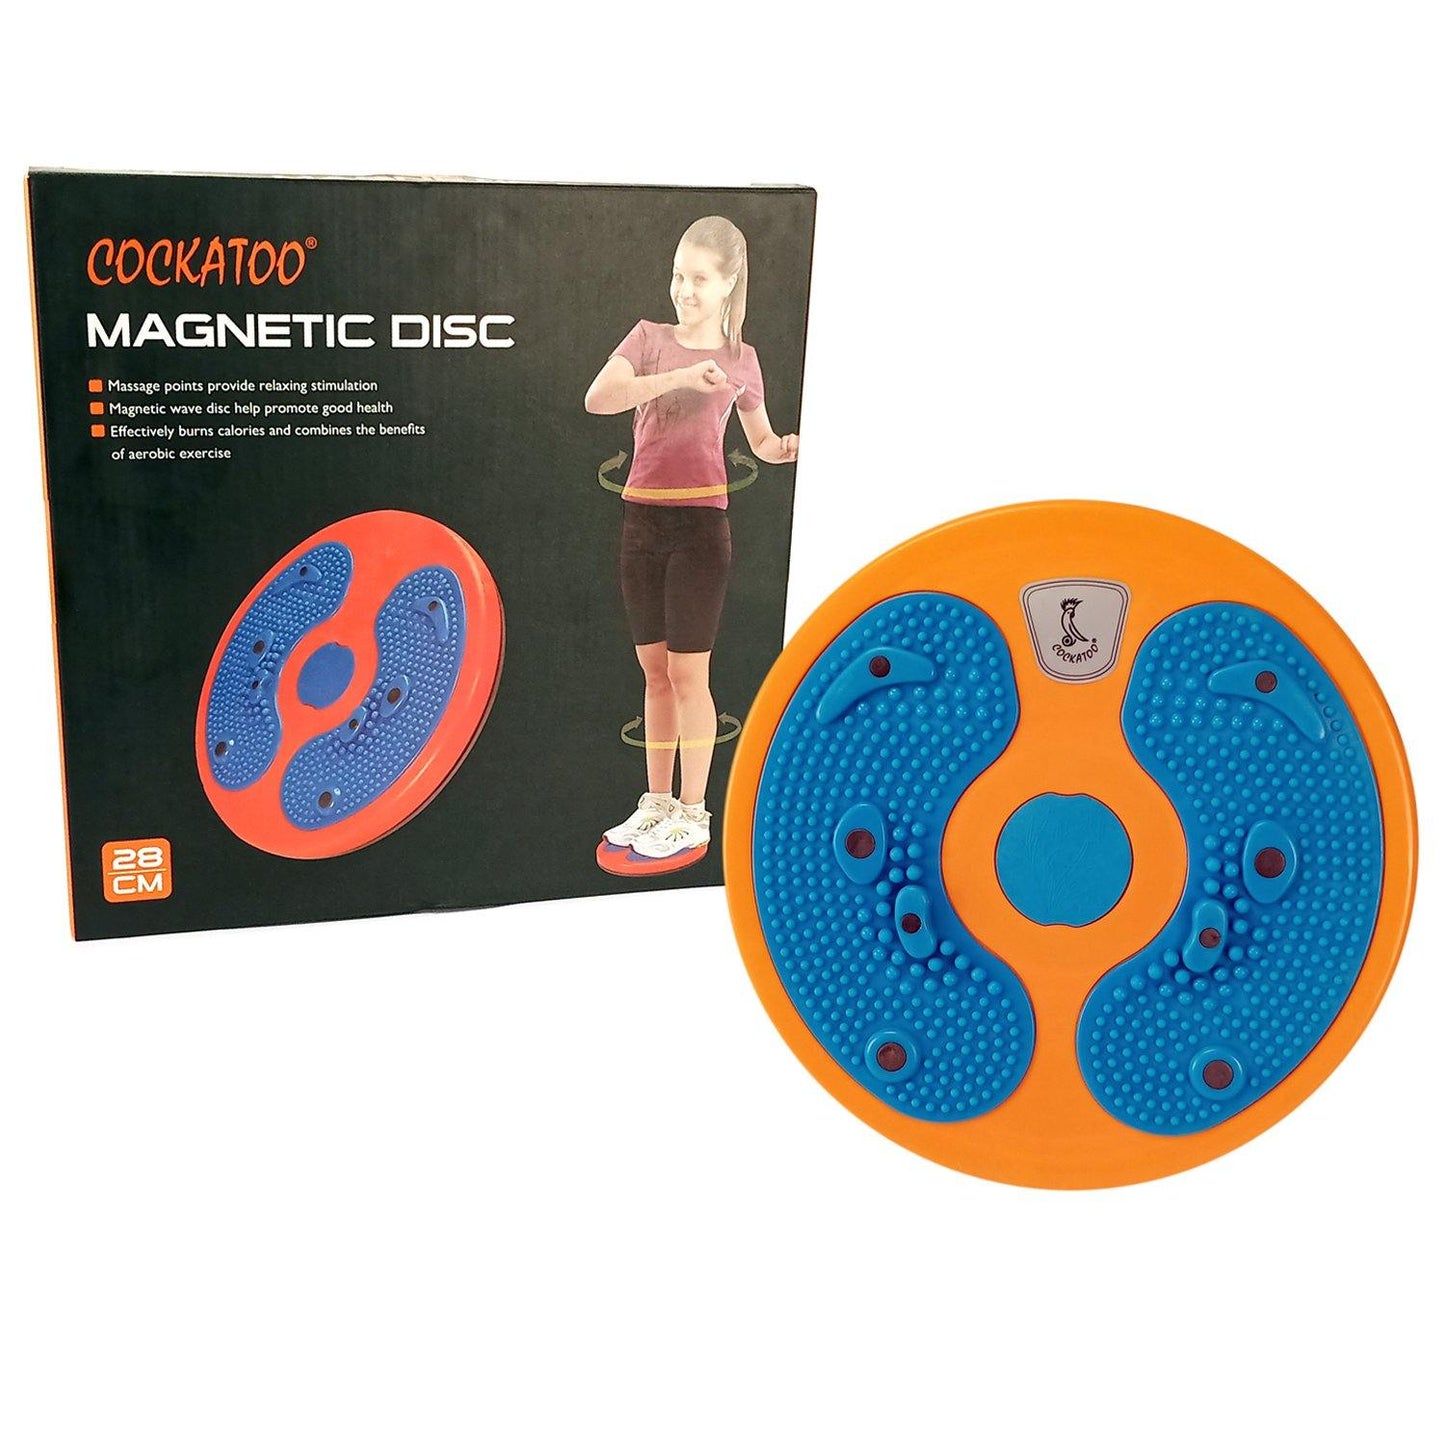 Cockatoo Magnetic Disk Tummy Twister Ab Exerciser - Best Price online Prokicksports.com